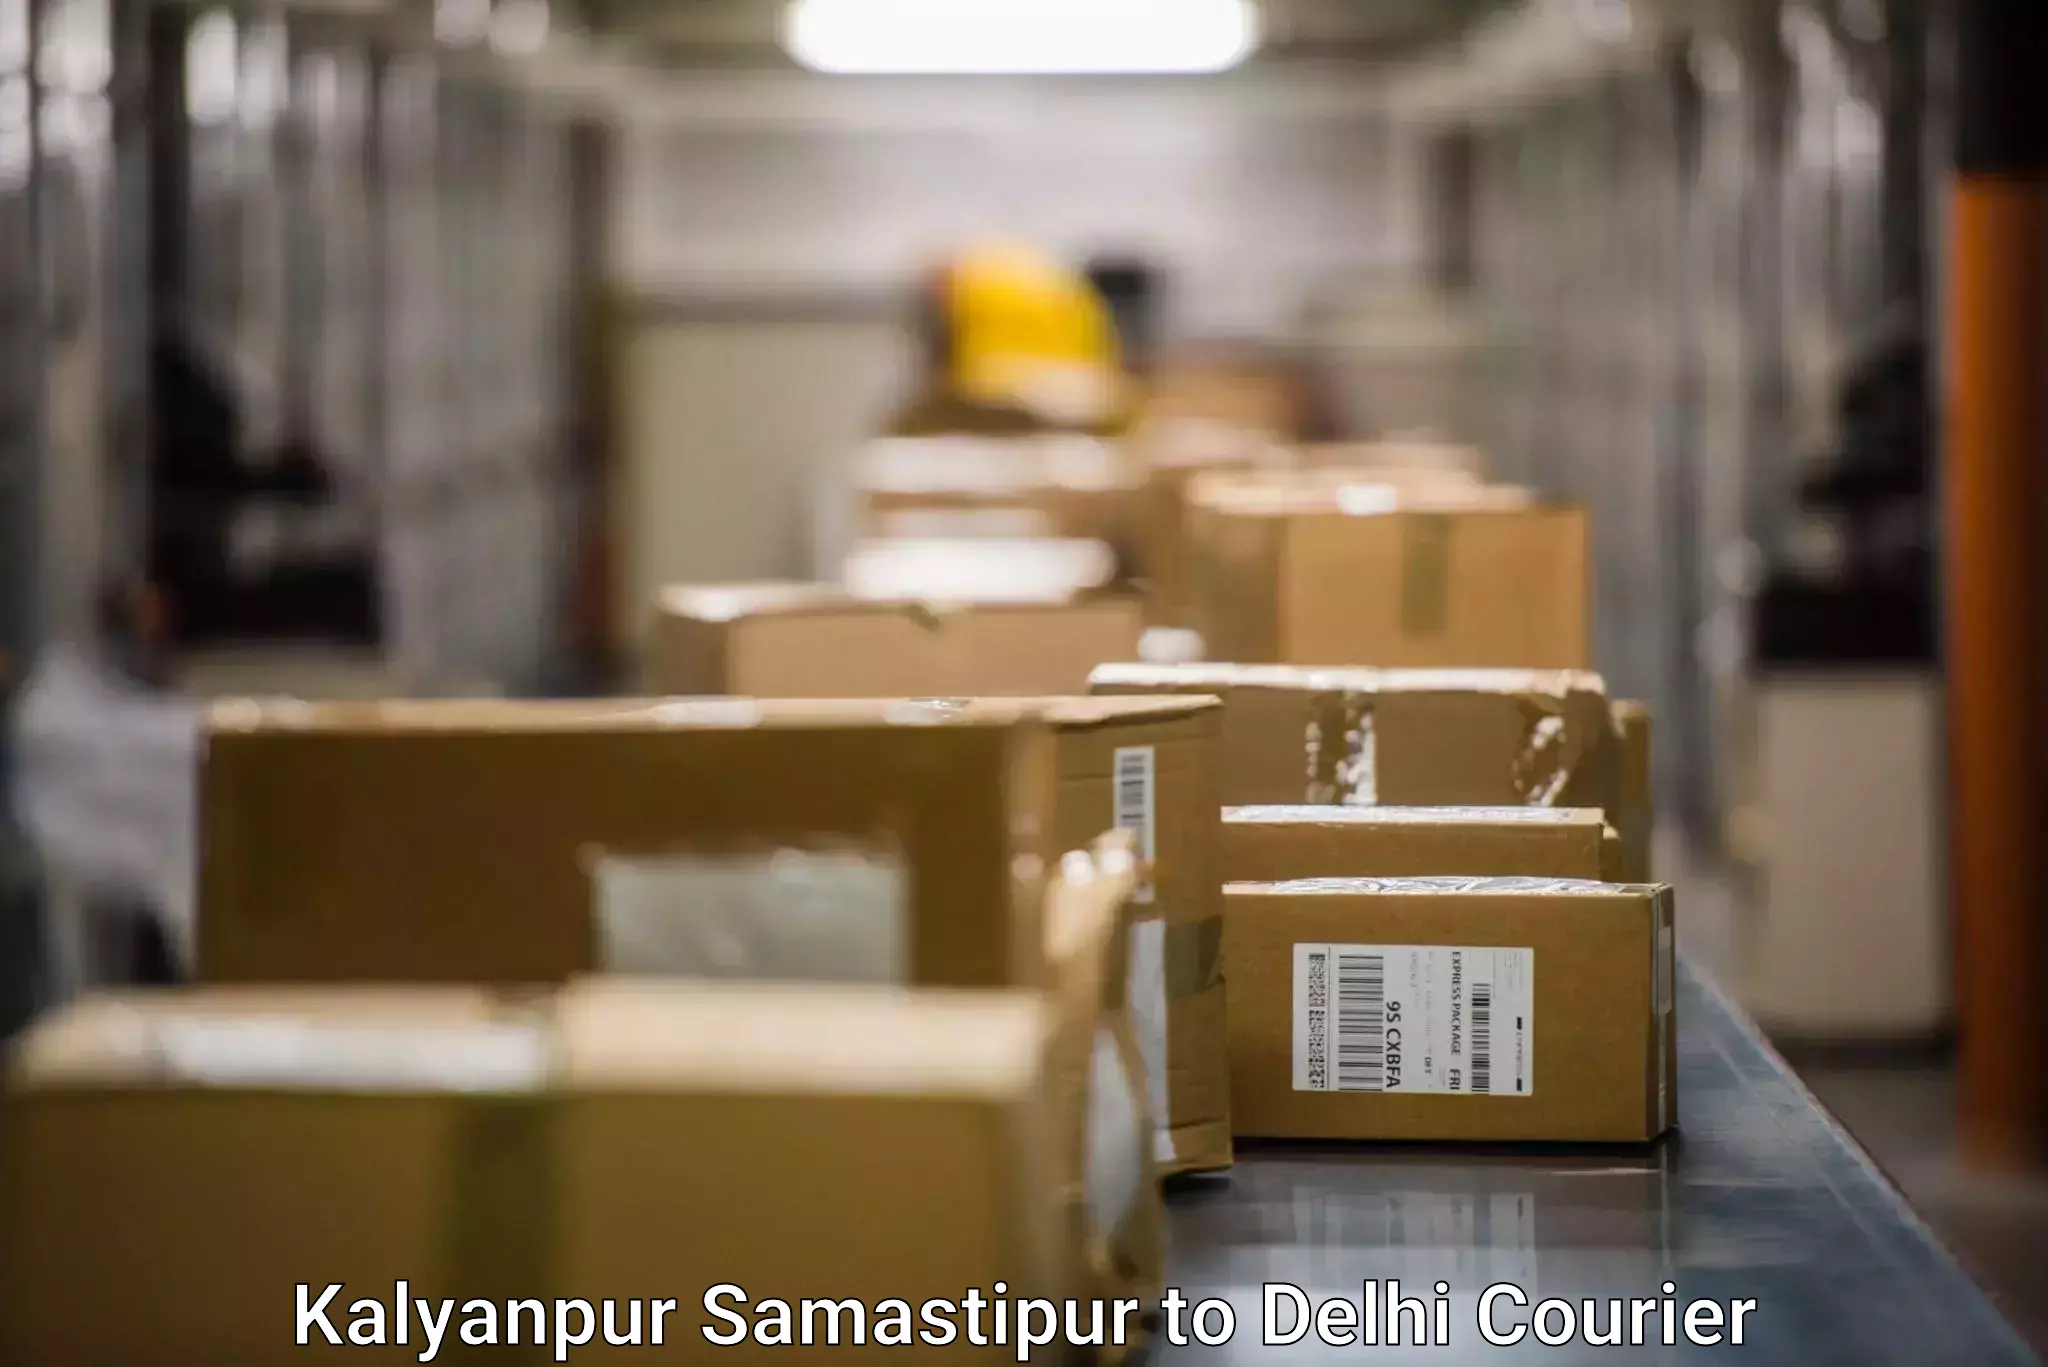 Courier service comparison Kalyanpur Samastipur to University of Delhi